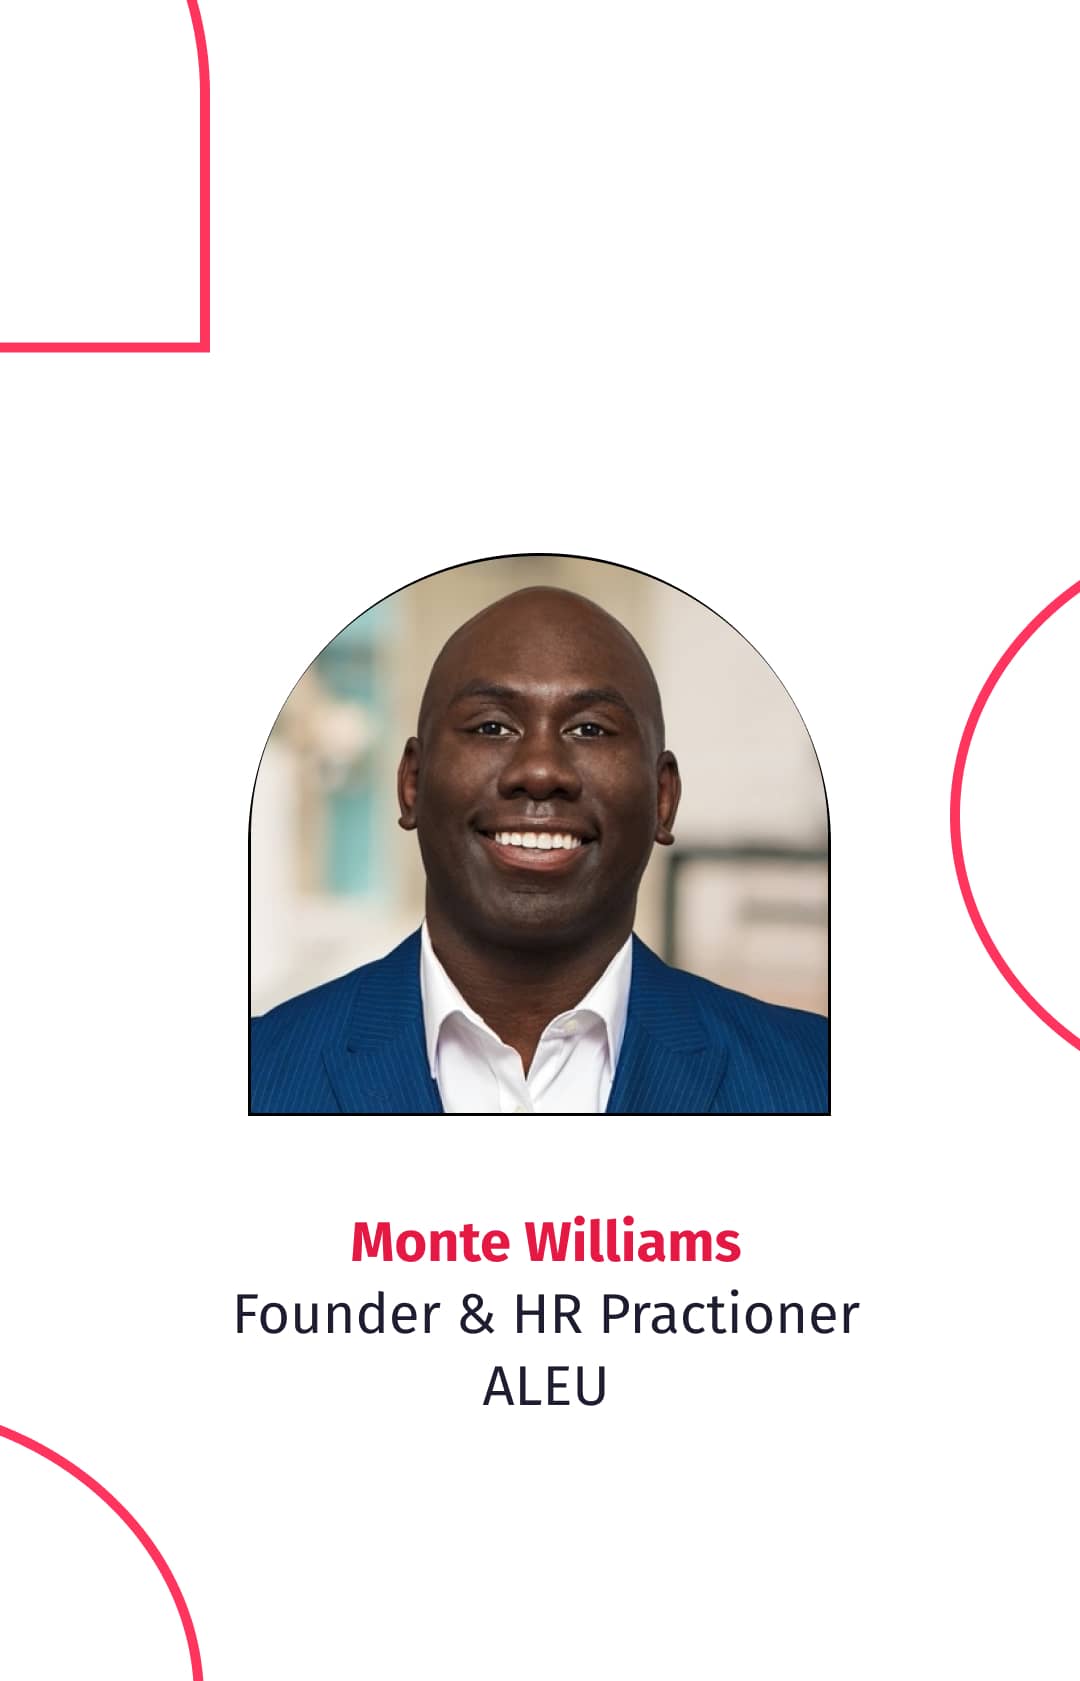 HR practitioner, TedX speaker, and coach, Monte Williams